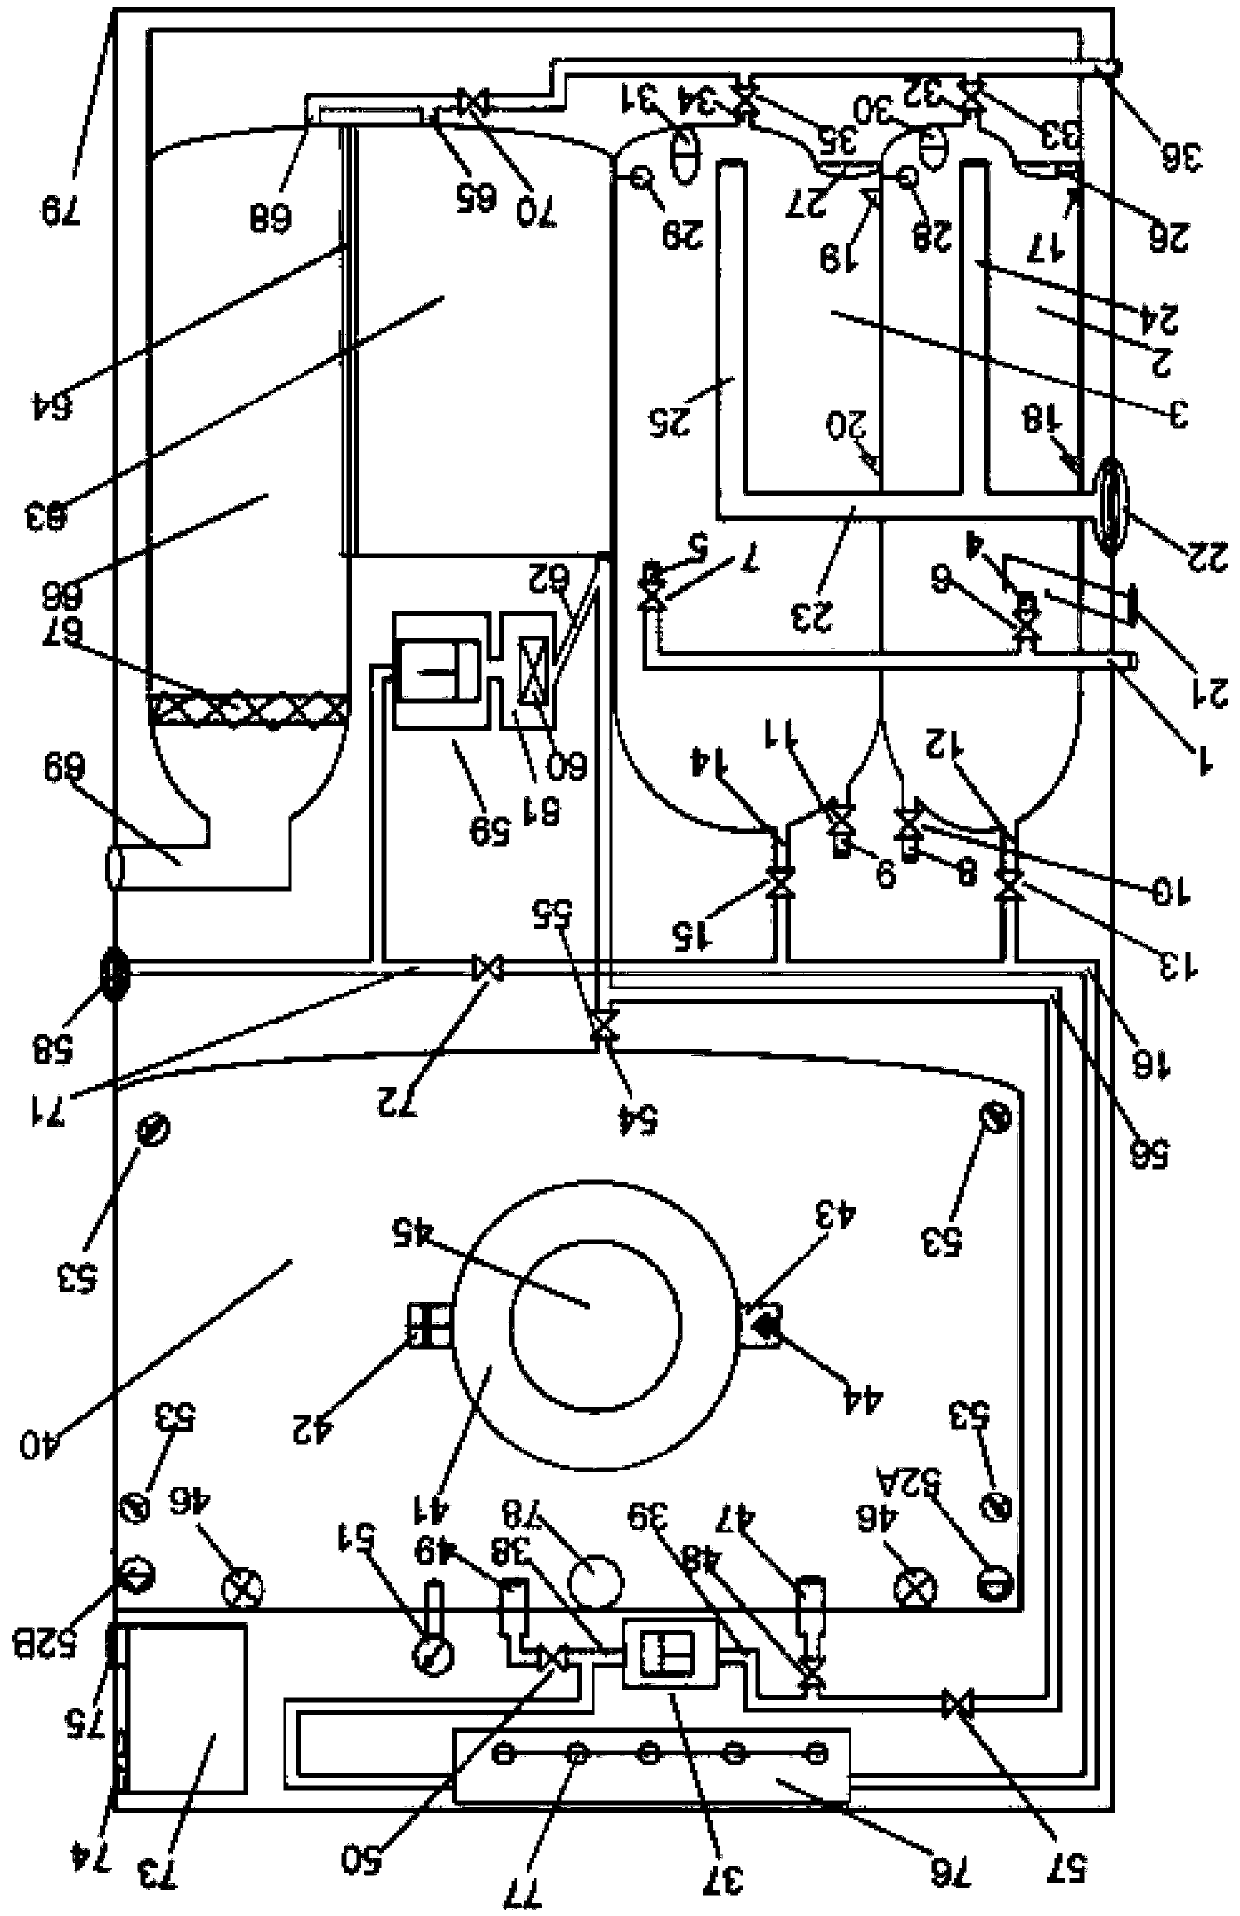 Washing method and system of ultrasonic atomization steam washing machine